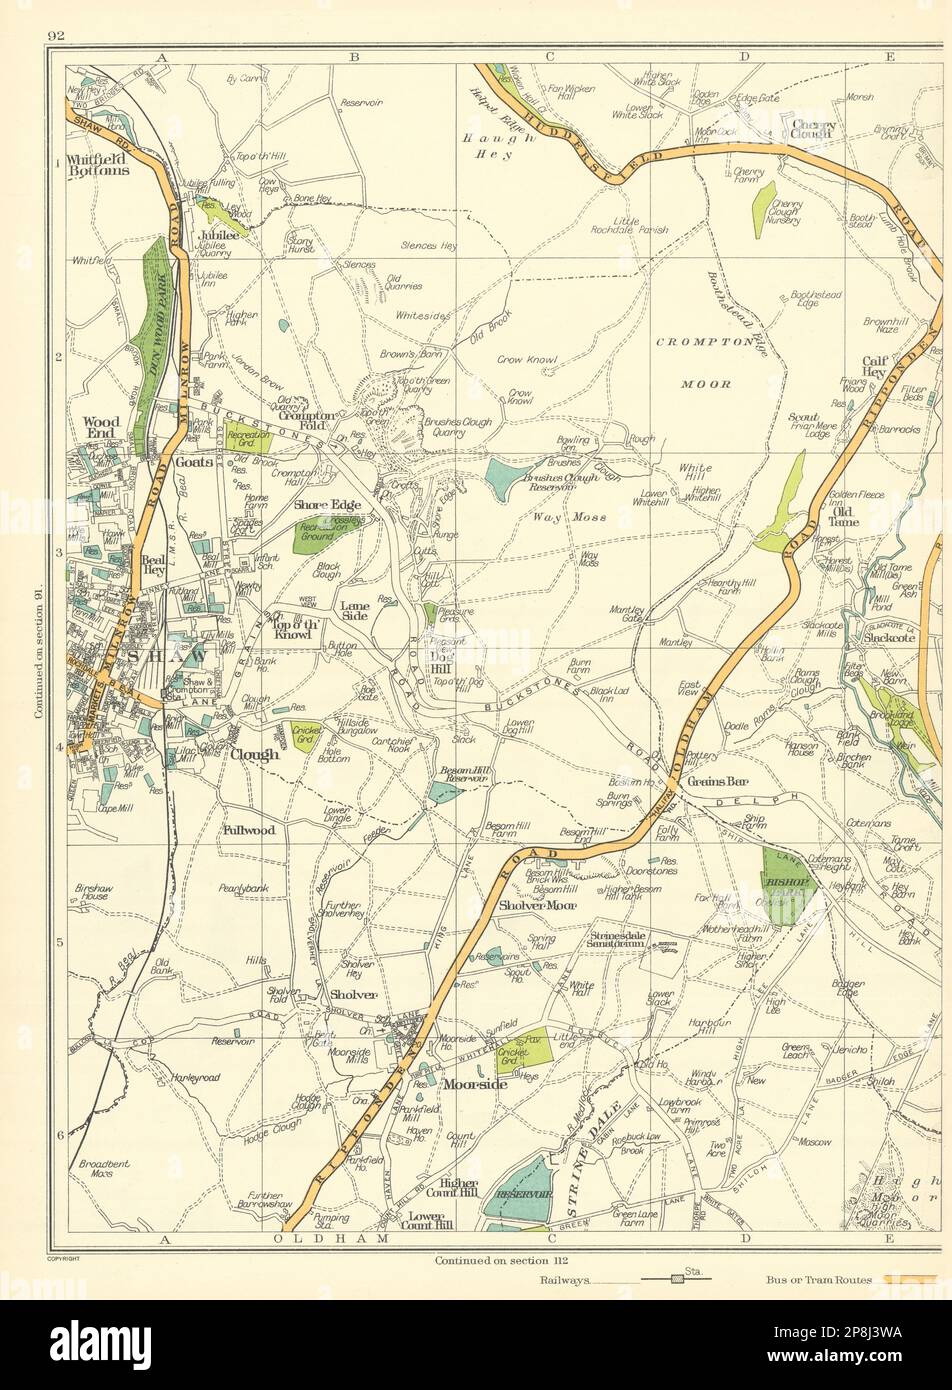 LANCASHIRE Moorside Sholver Moor Clough Shaw Sholver Moor Oldham 1935 map Stock Photo